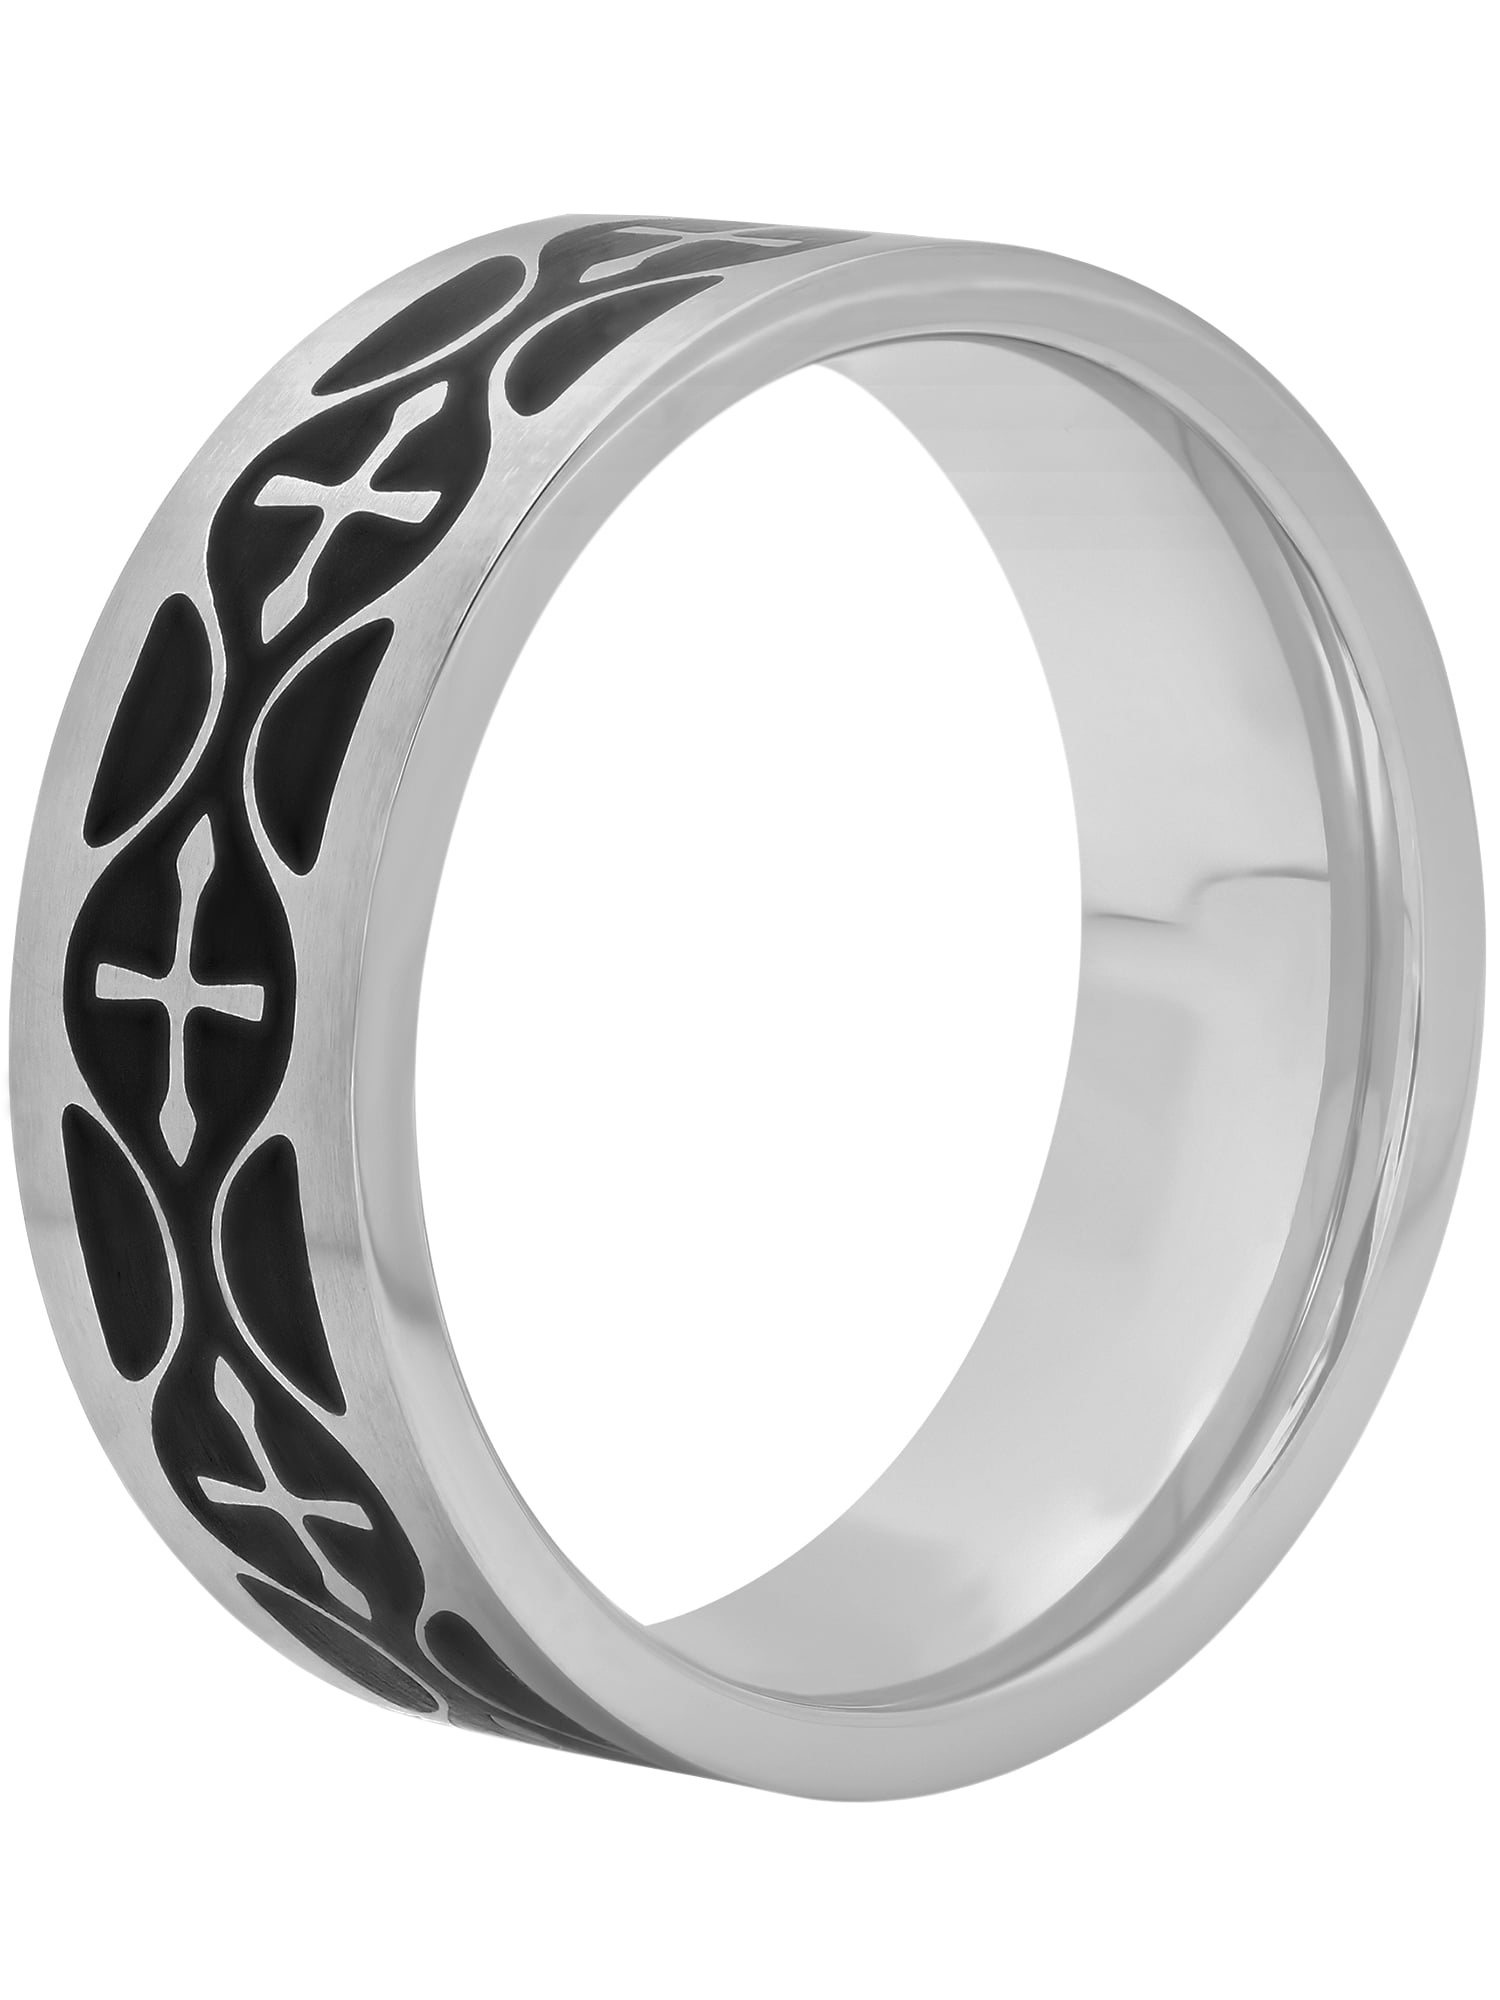 Men's Black and White Cross Ring in Stainless Steel - Walmart.com